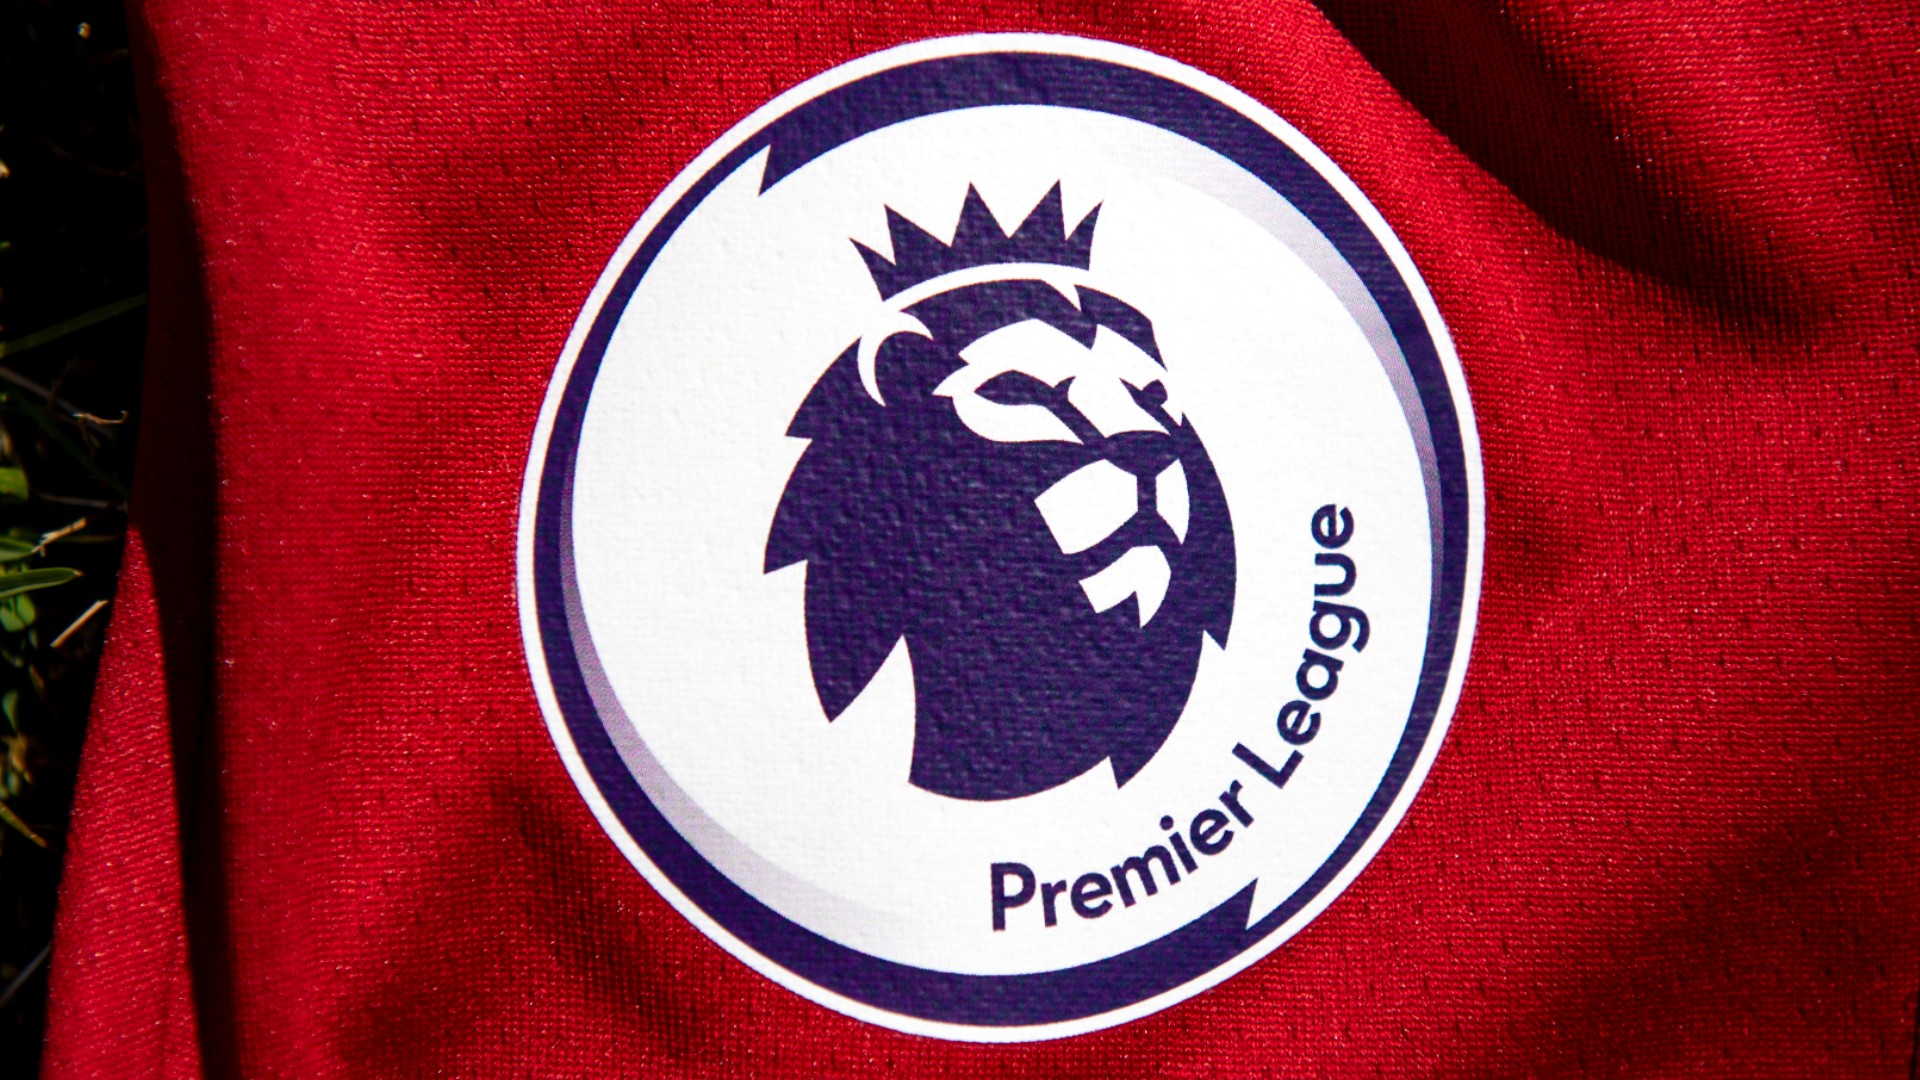 english premier league logo